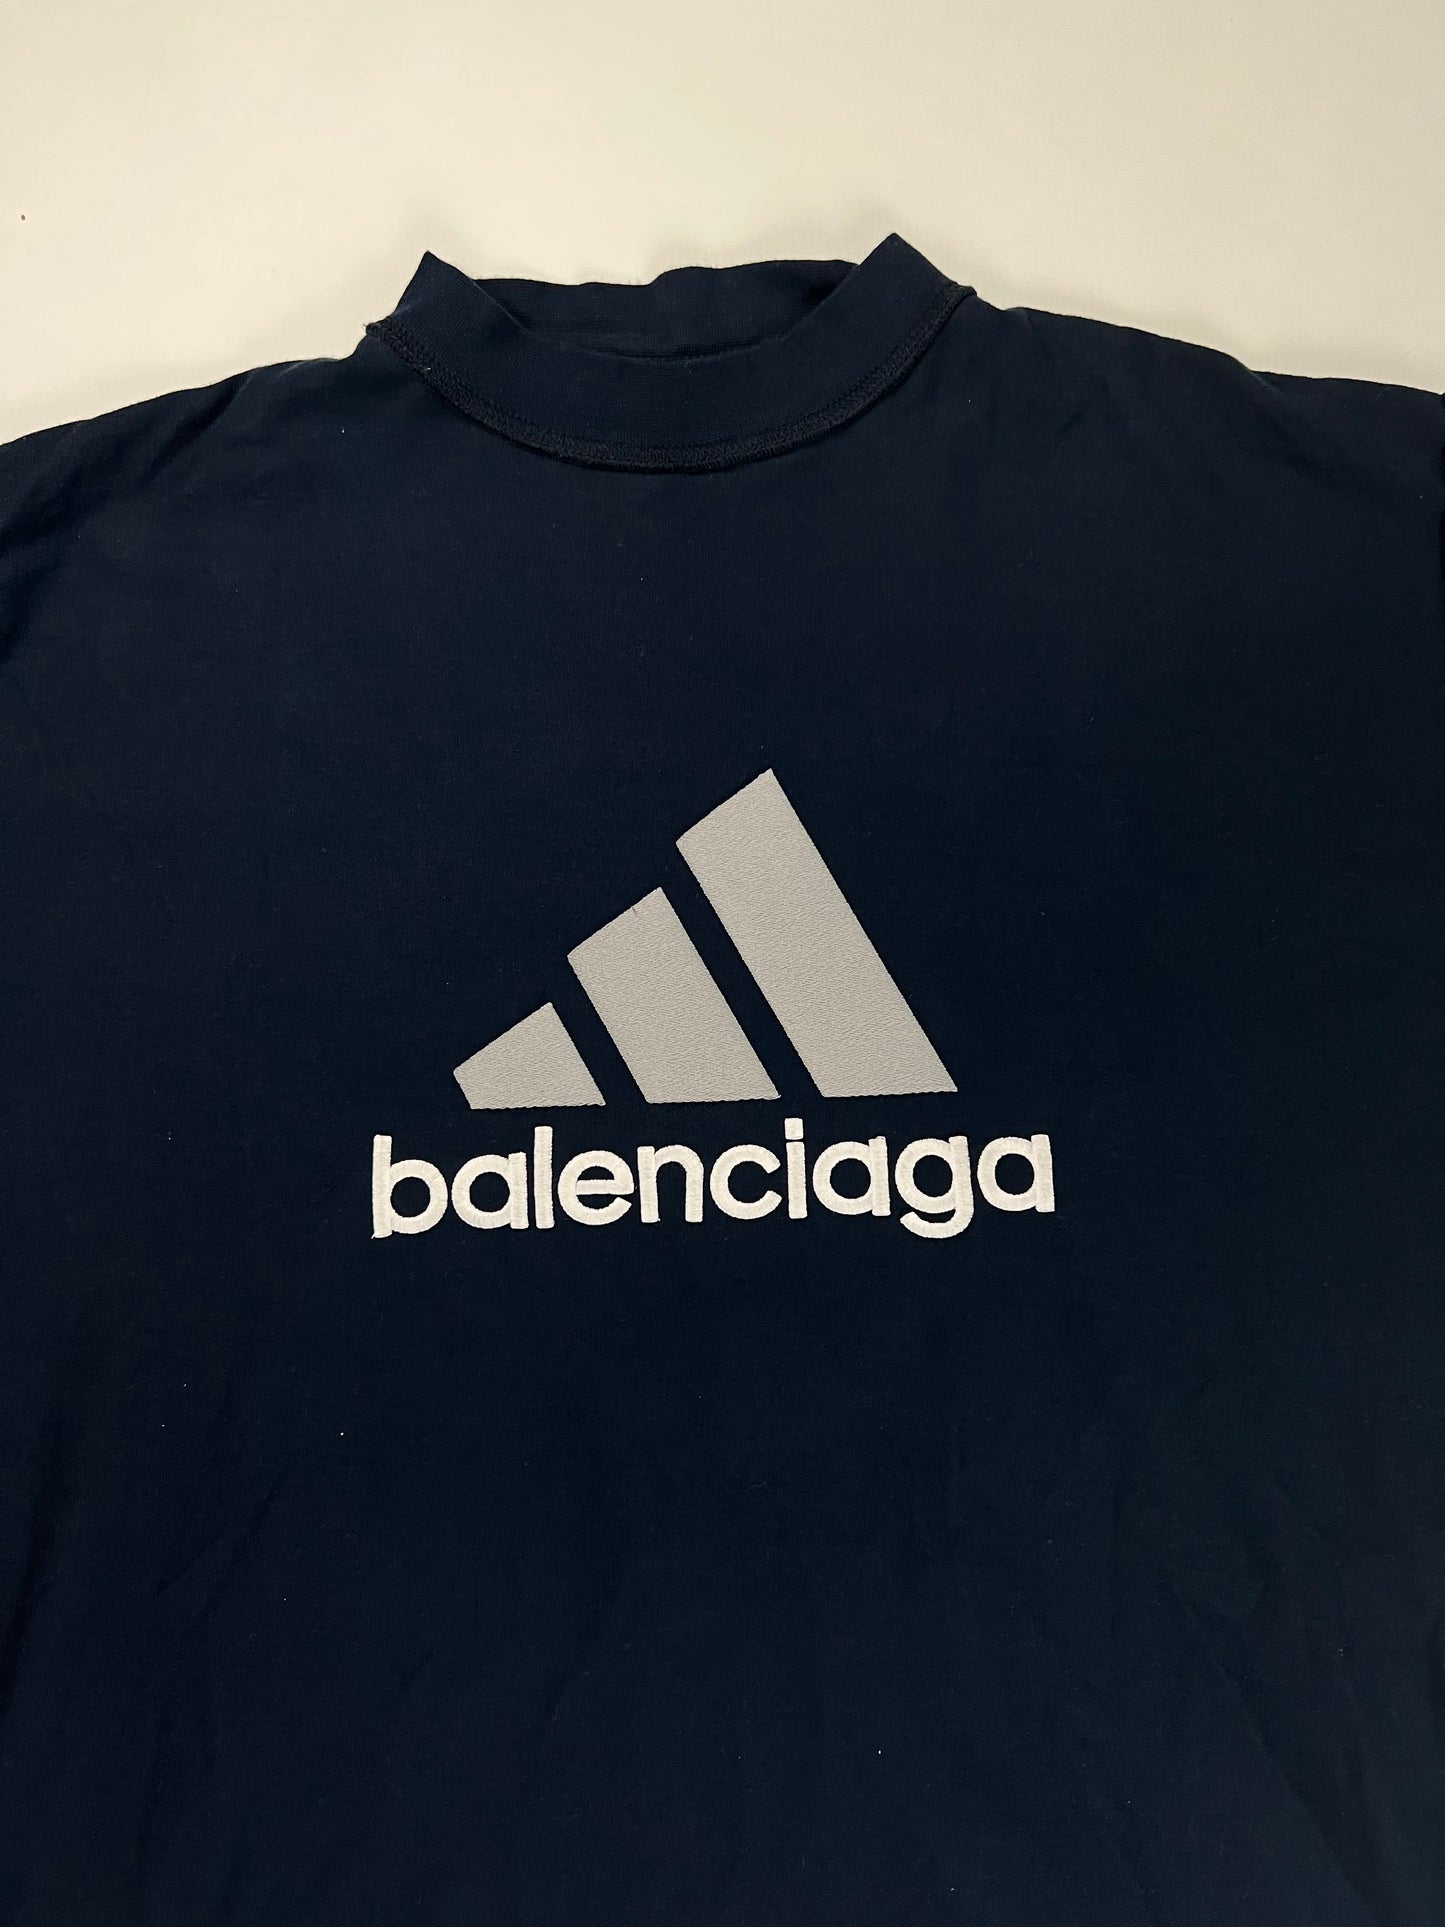 Balenciaga x Adidas navy inside out T-shirt in navy SZ:1